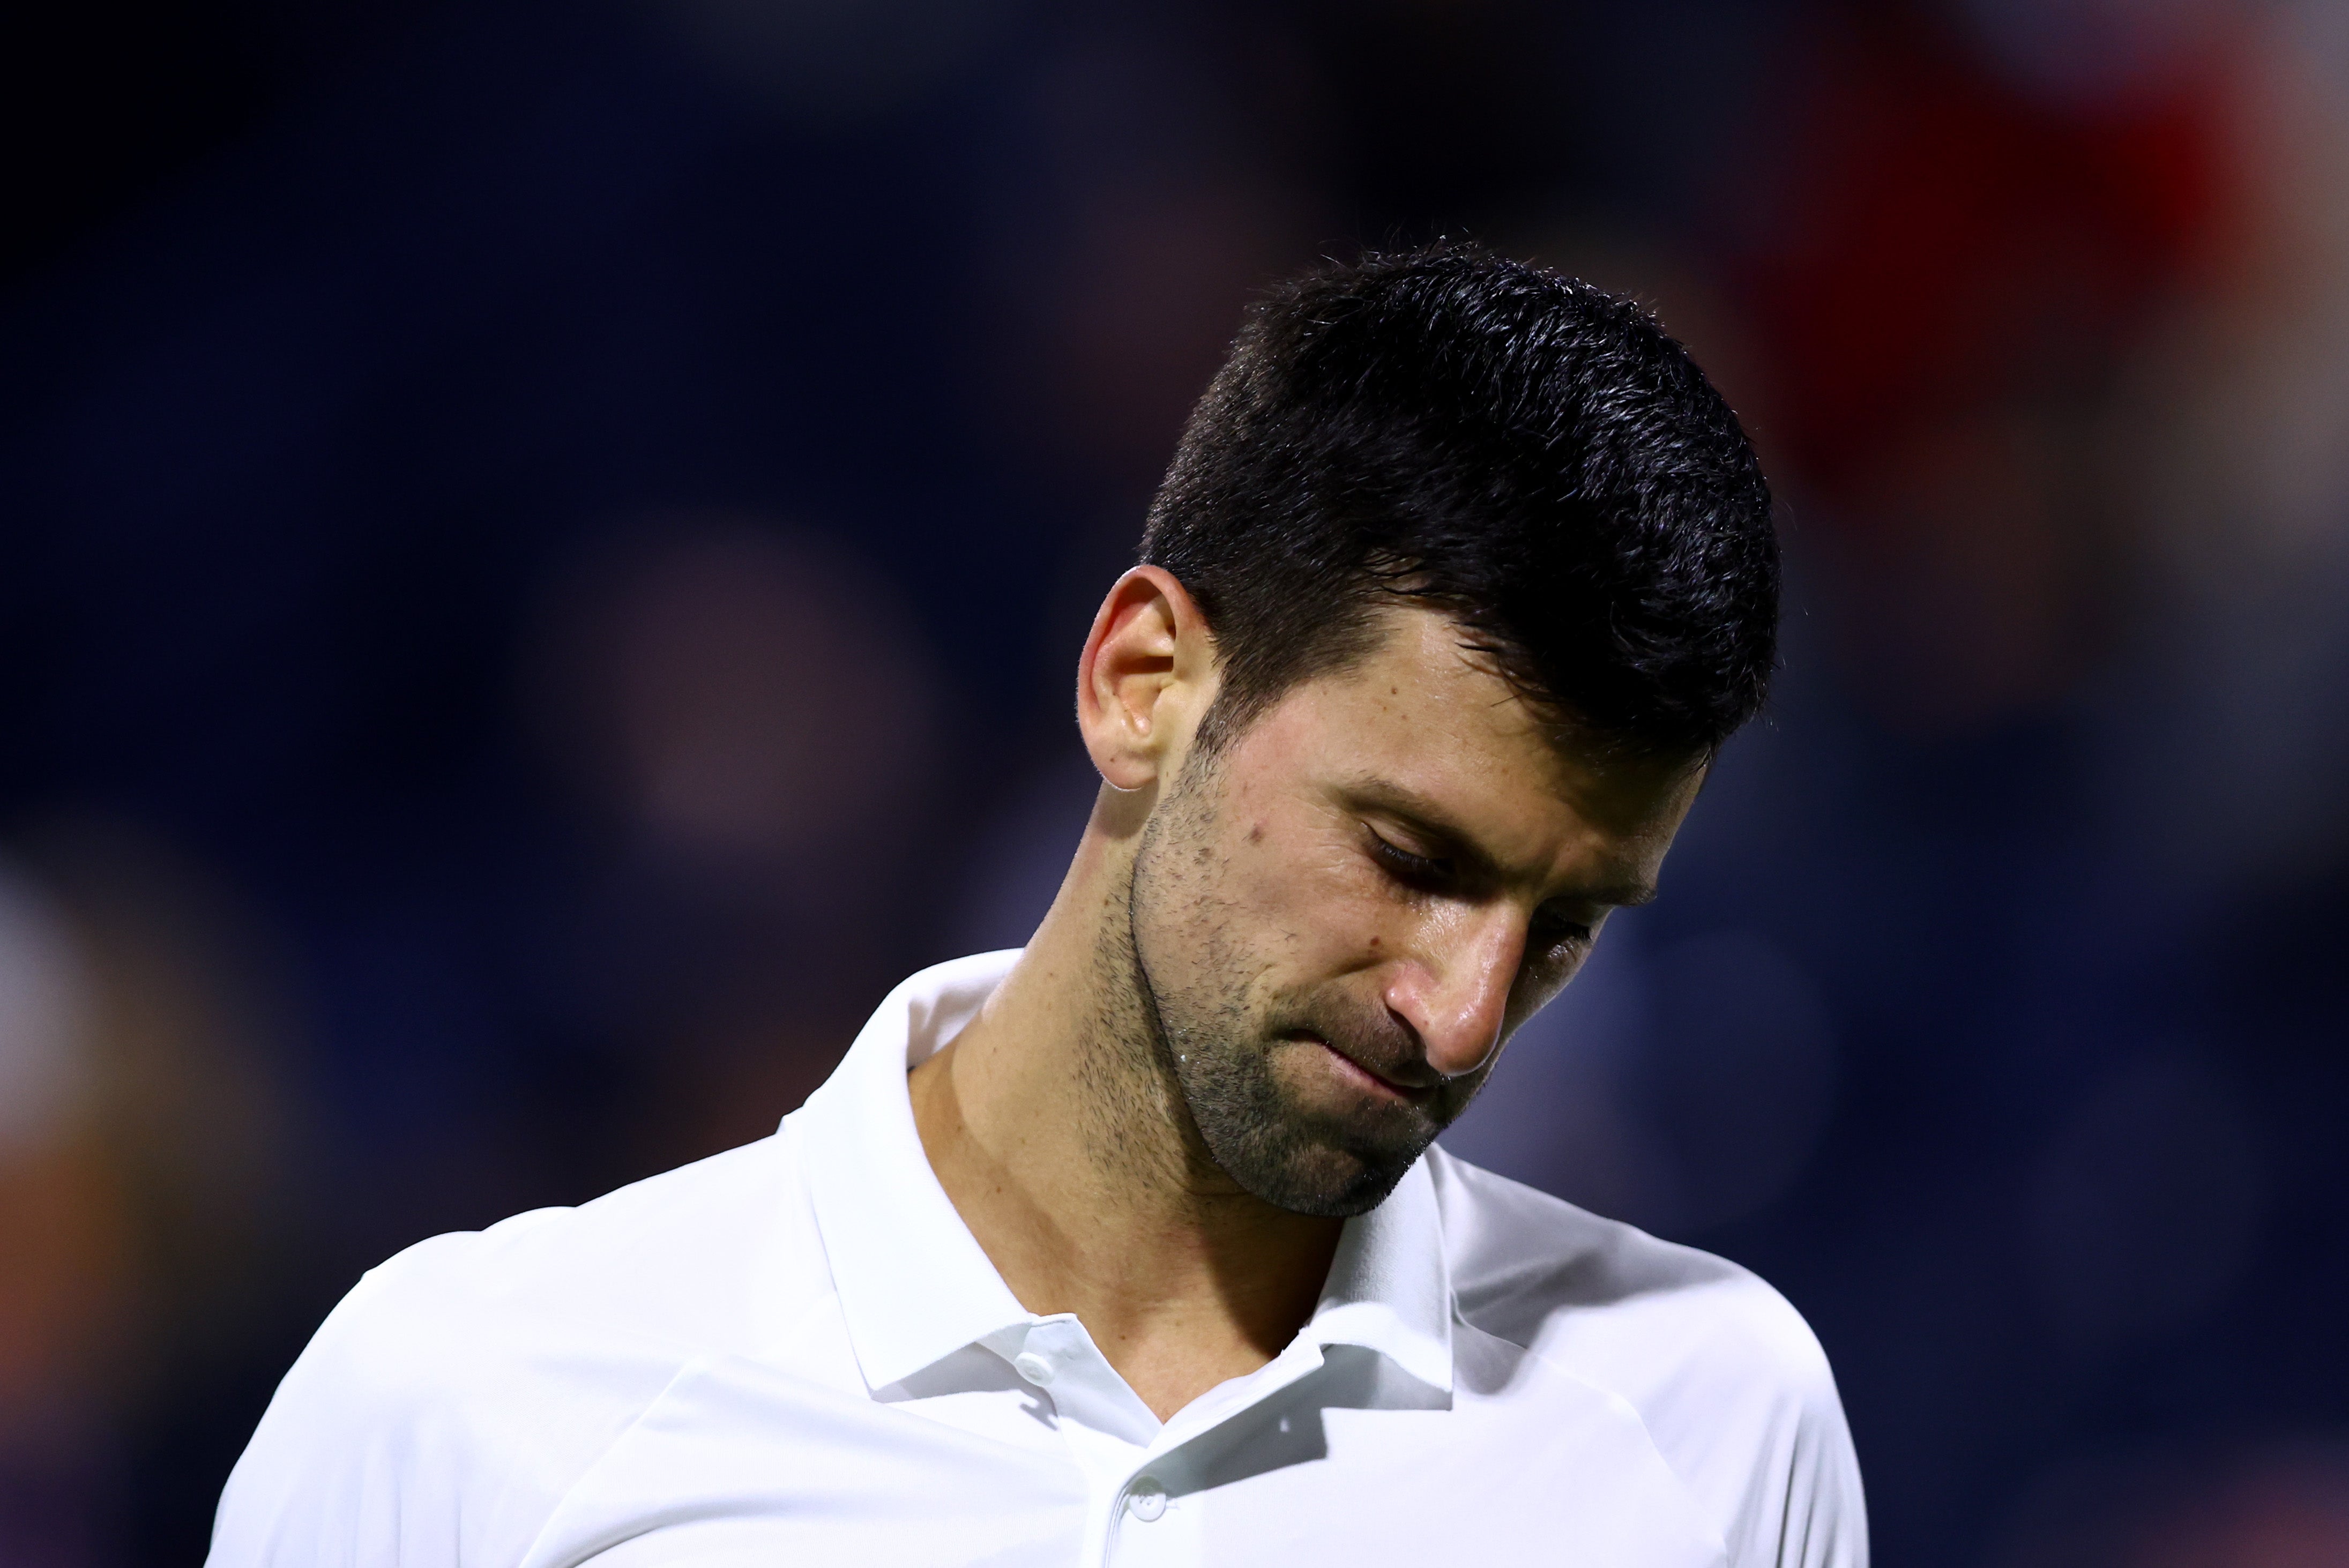 Novak Djokovic was making his season debut at the tournament